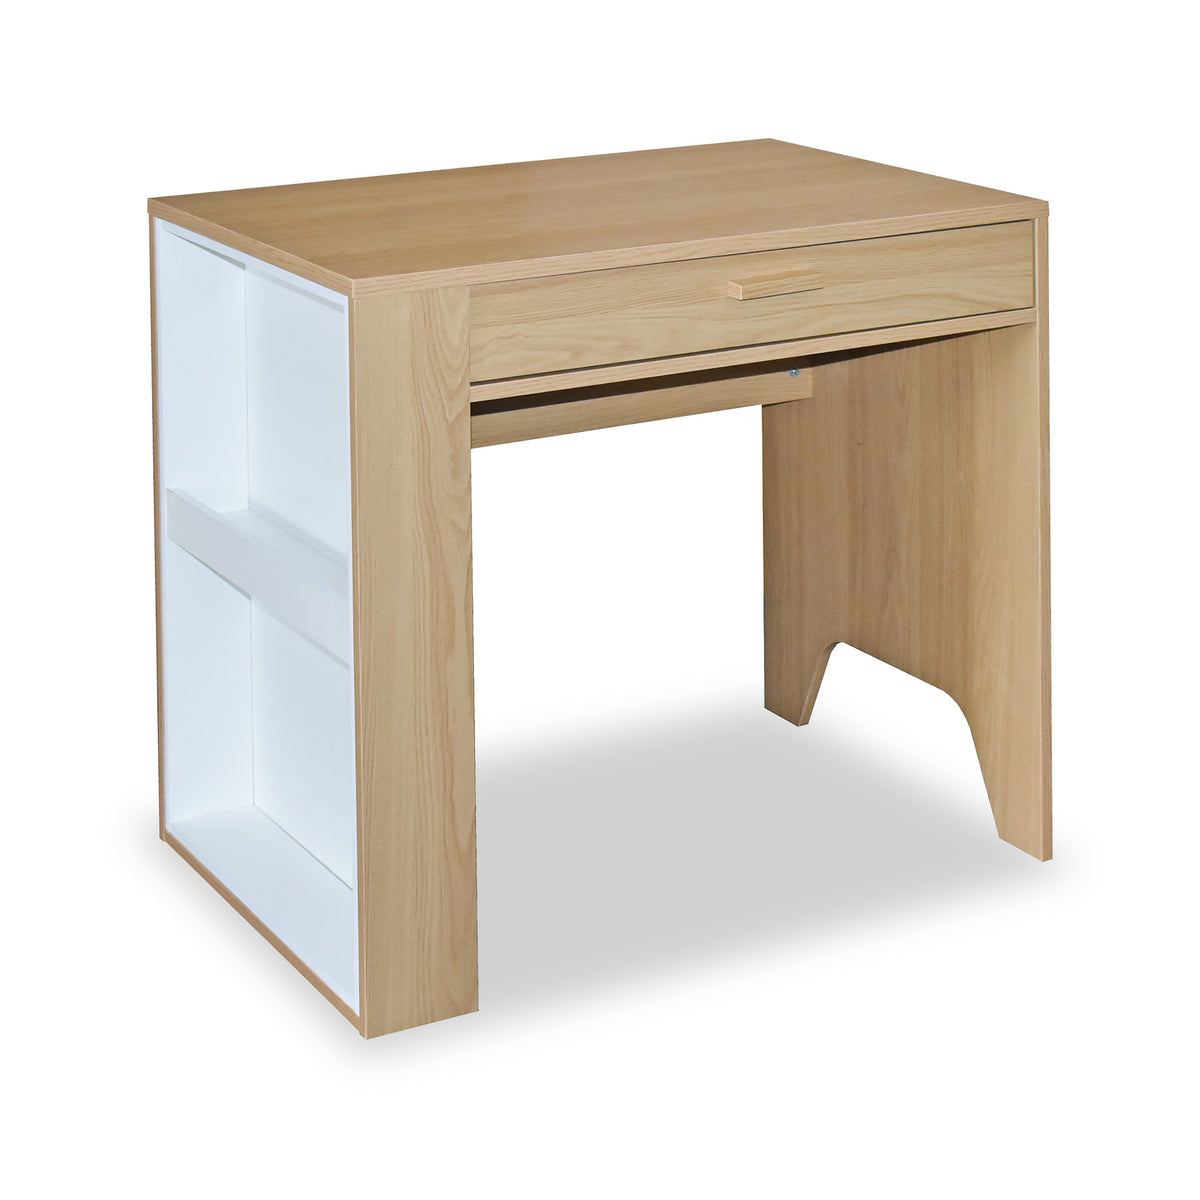 Kelso Oak Effect Desk from Roseland Furniture